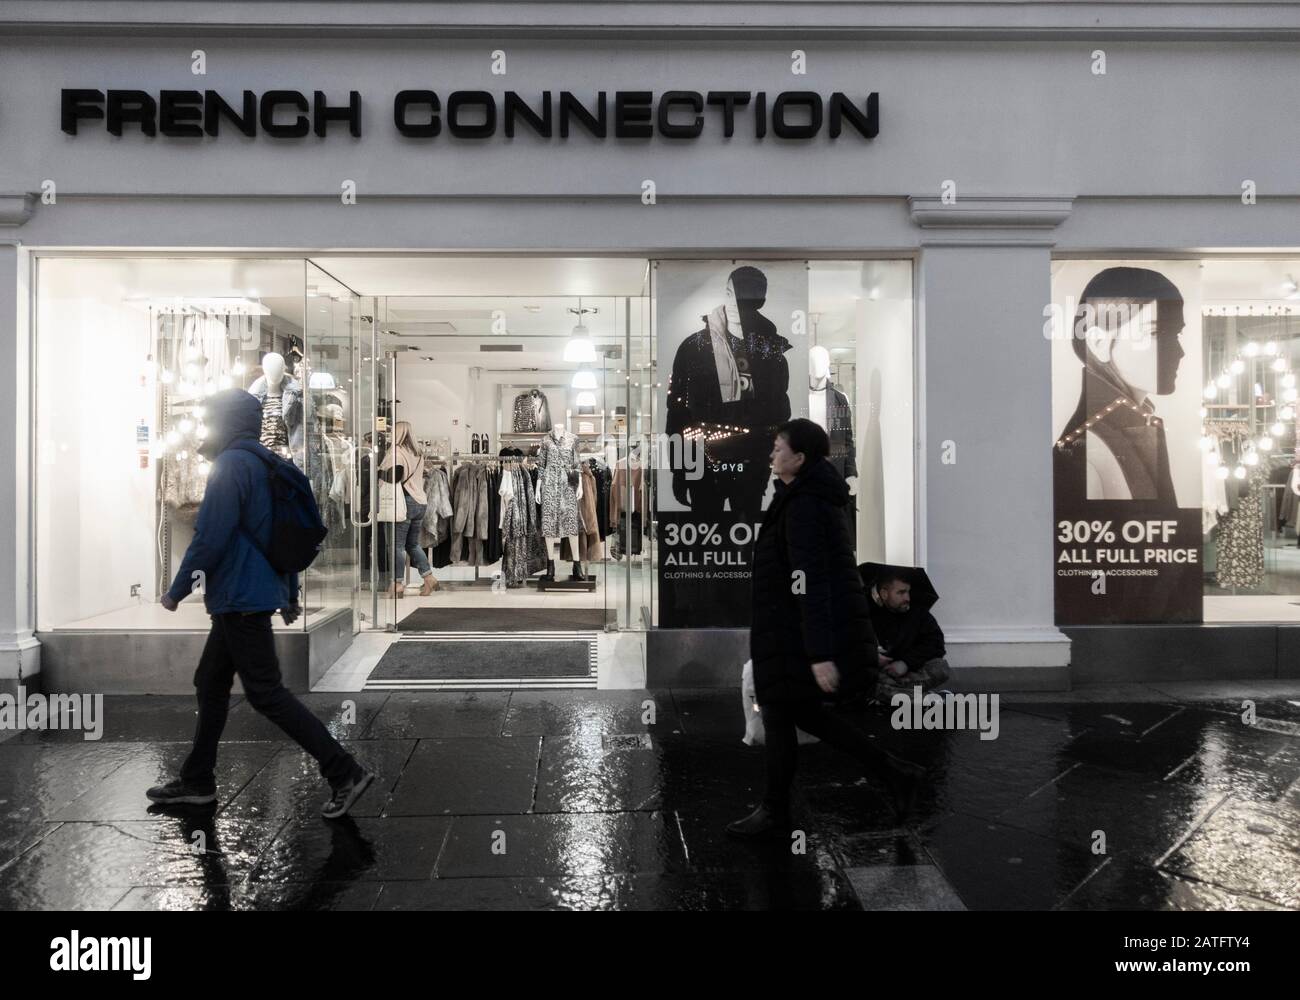 French Connection clothing store. UK Stock Photo